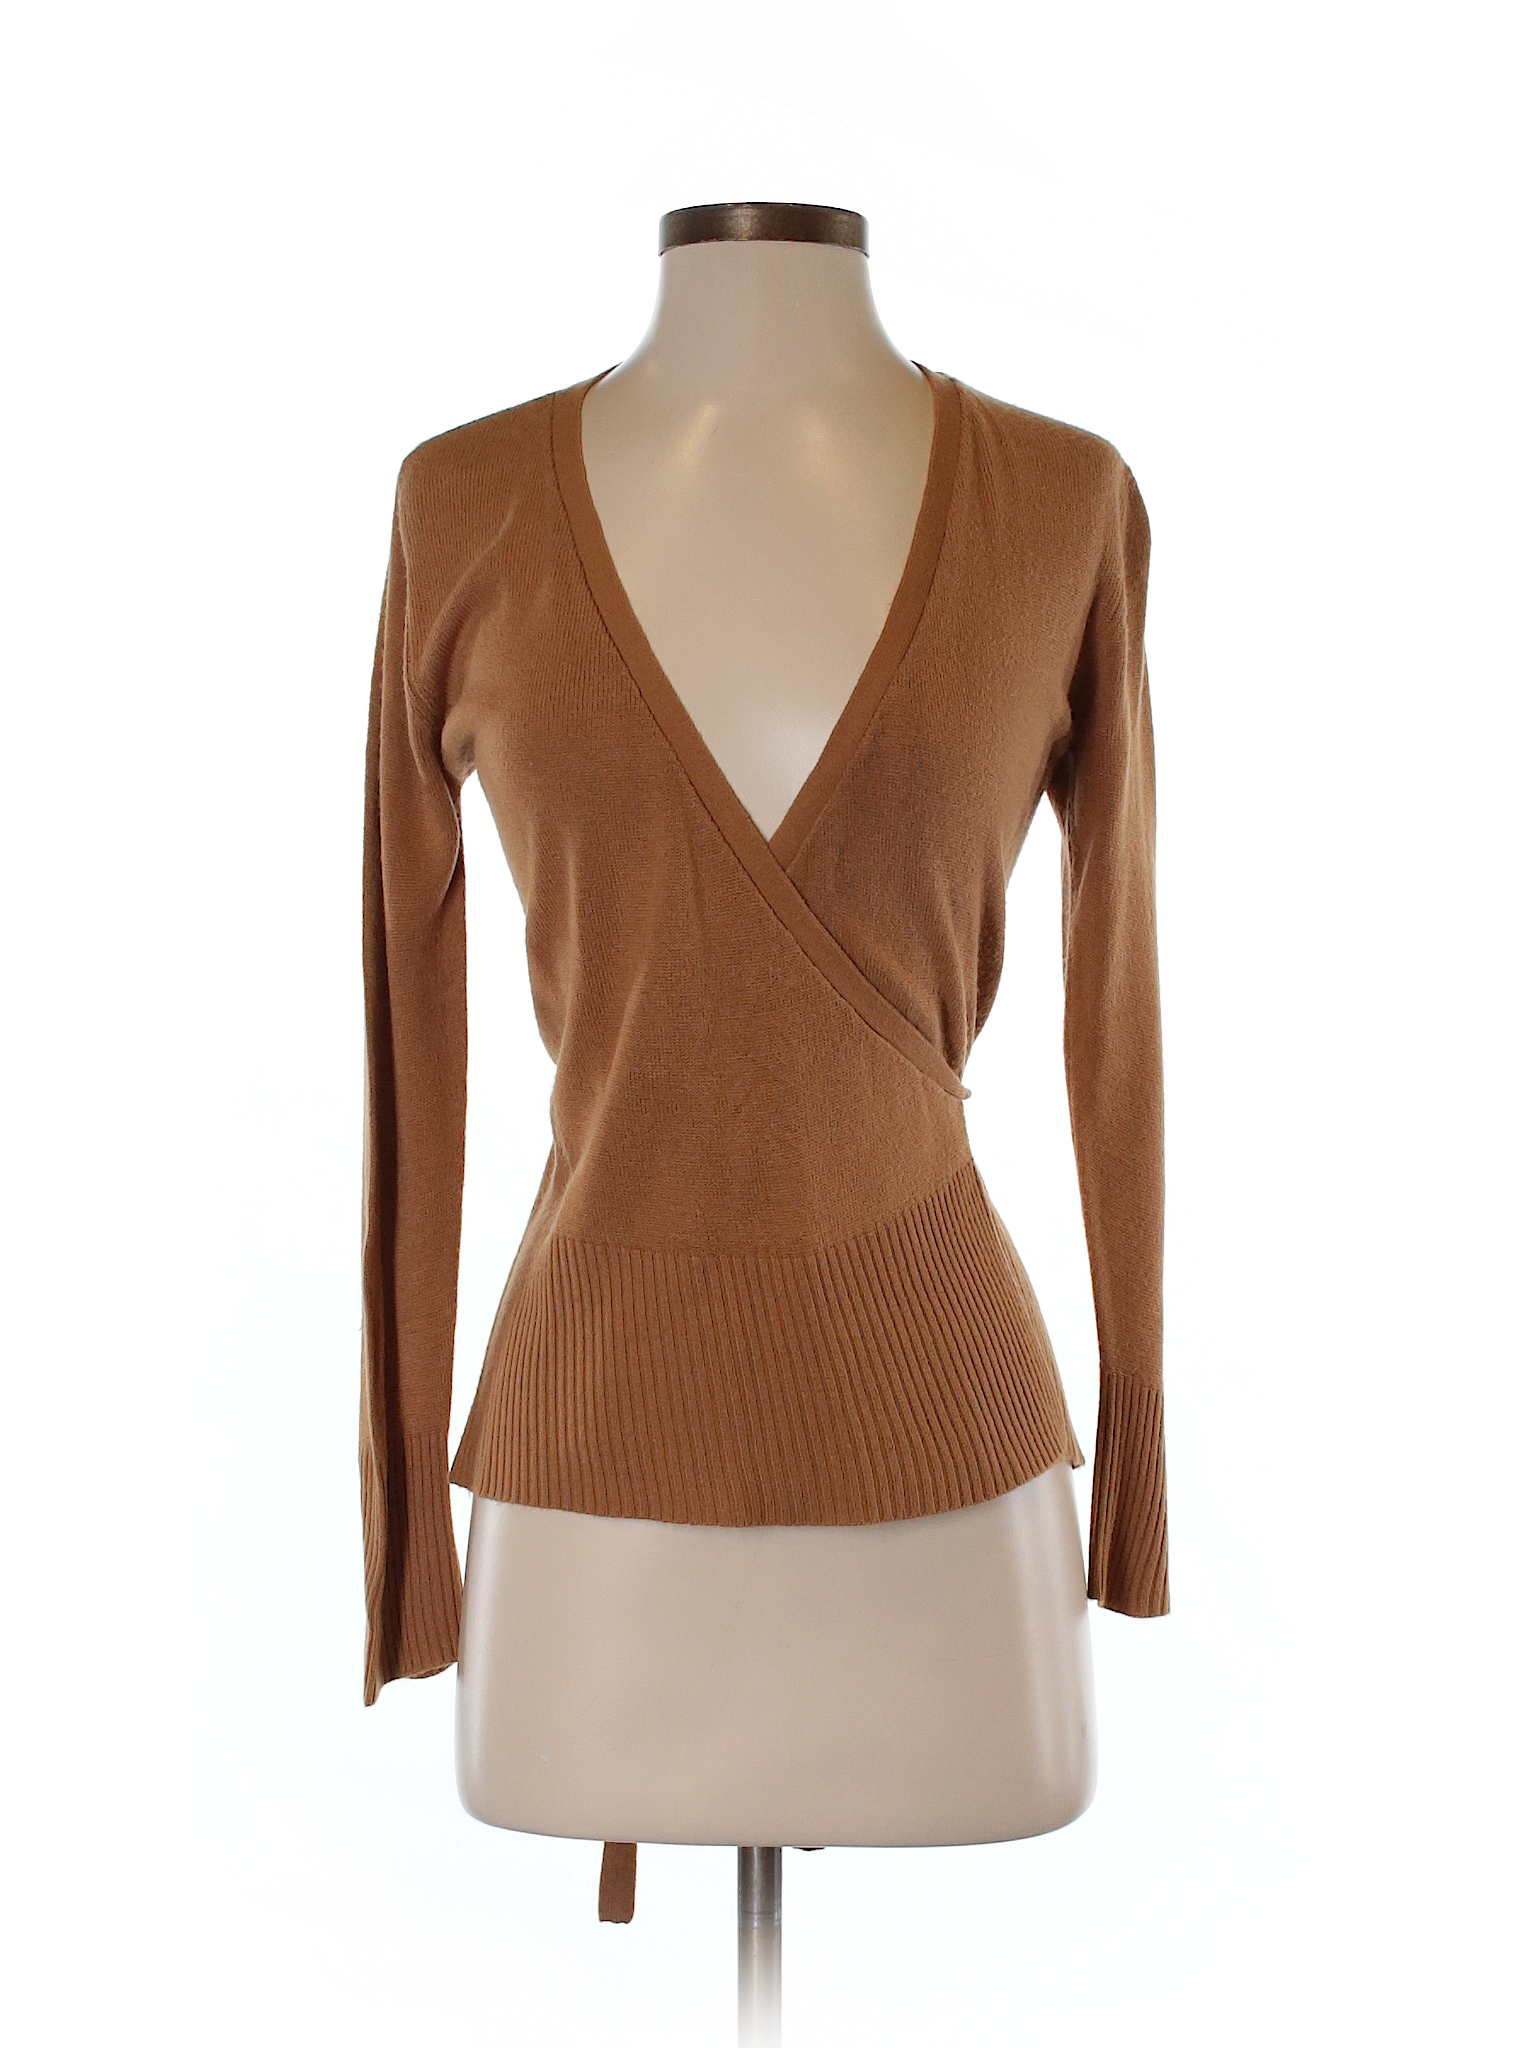 BCBGMAXAZRIA 100% Acrylic Solid Brown Cardigan Size XS - 89% off | thredUP